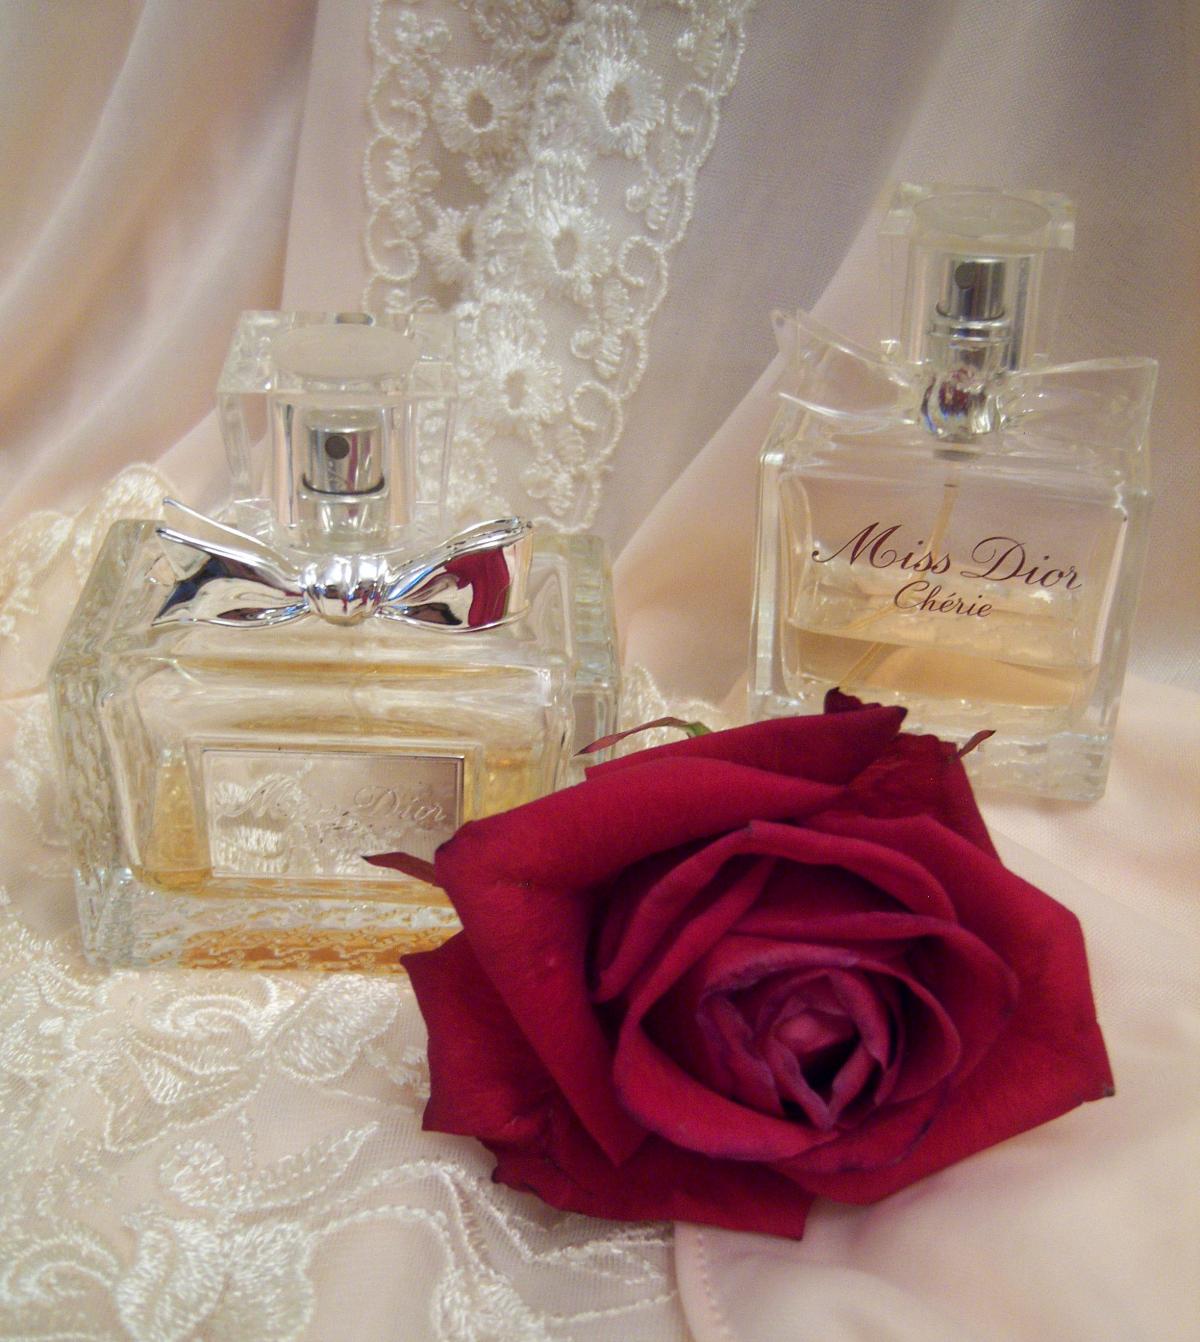 Miss Dior Cherie 2007 Christian Dior perfume - a fragrance for women 2007